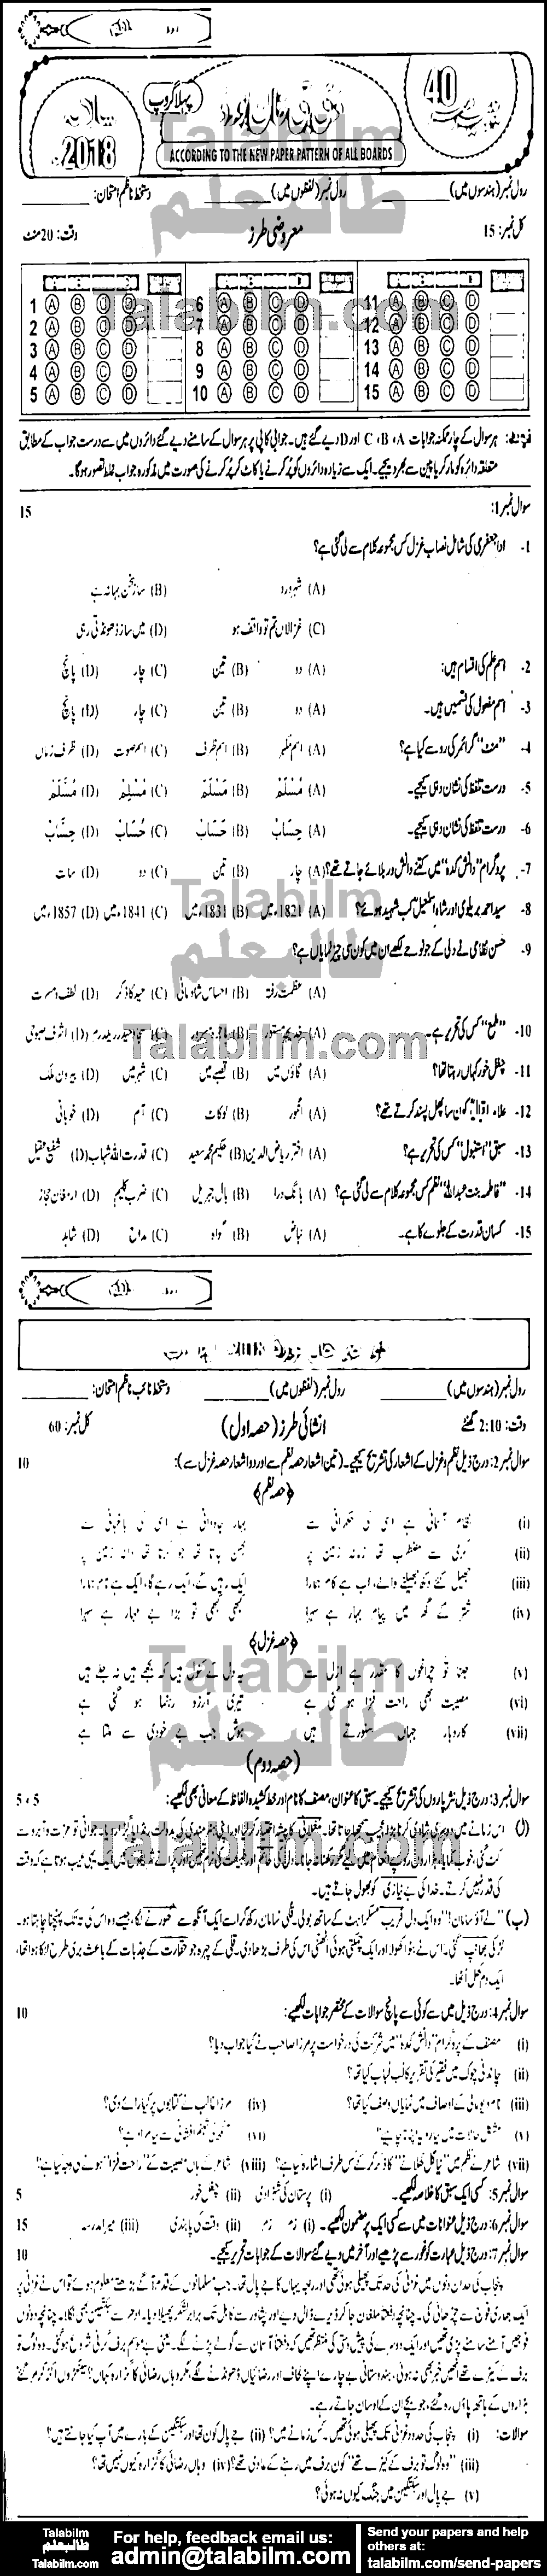 Urdu 0 past paper for 2018 Group-I